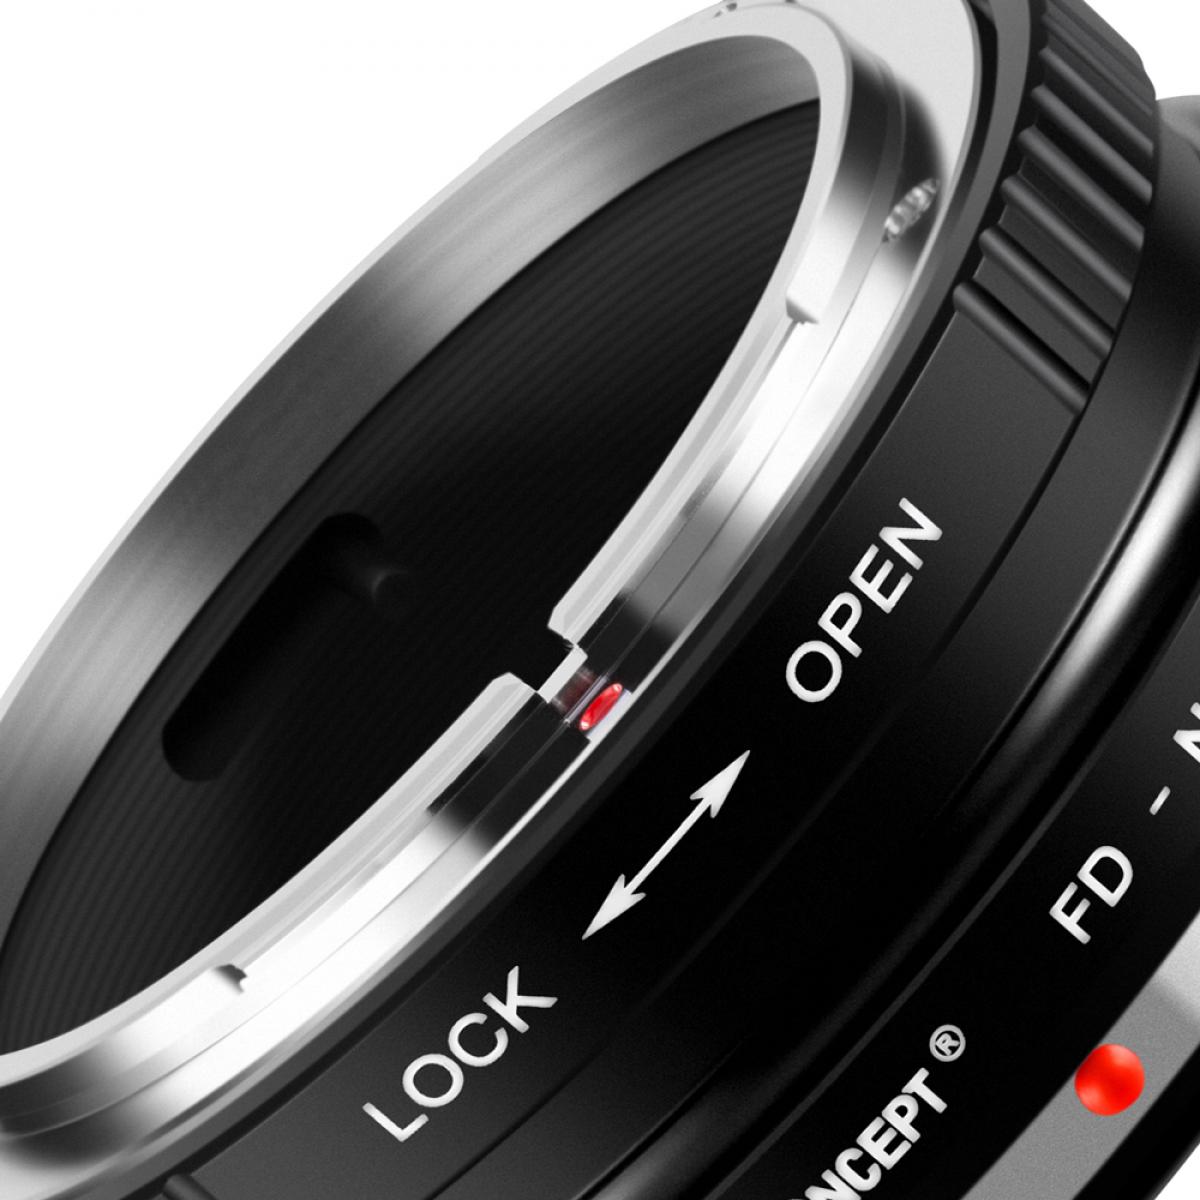 FD FL Lens to Nikon Z6 Z7 Camera K&F Concept Lens Mount Adapter Lens Adapter